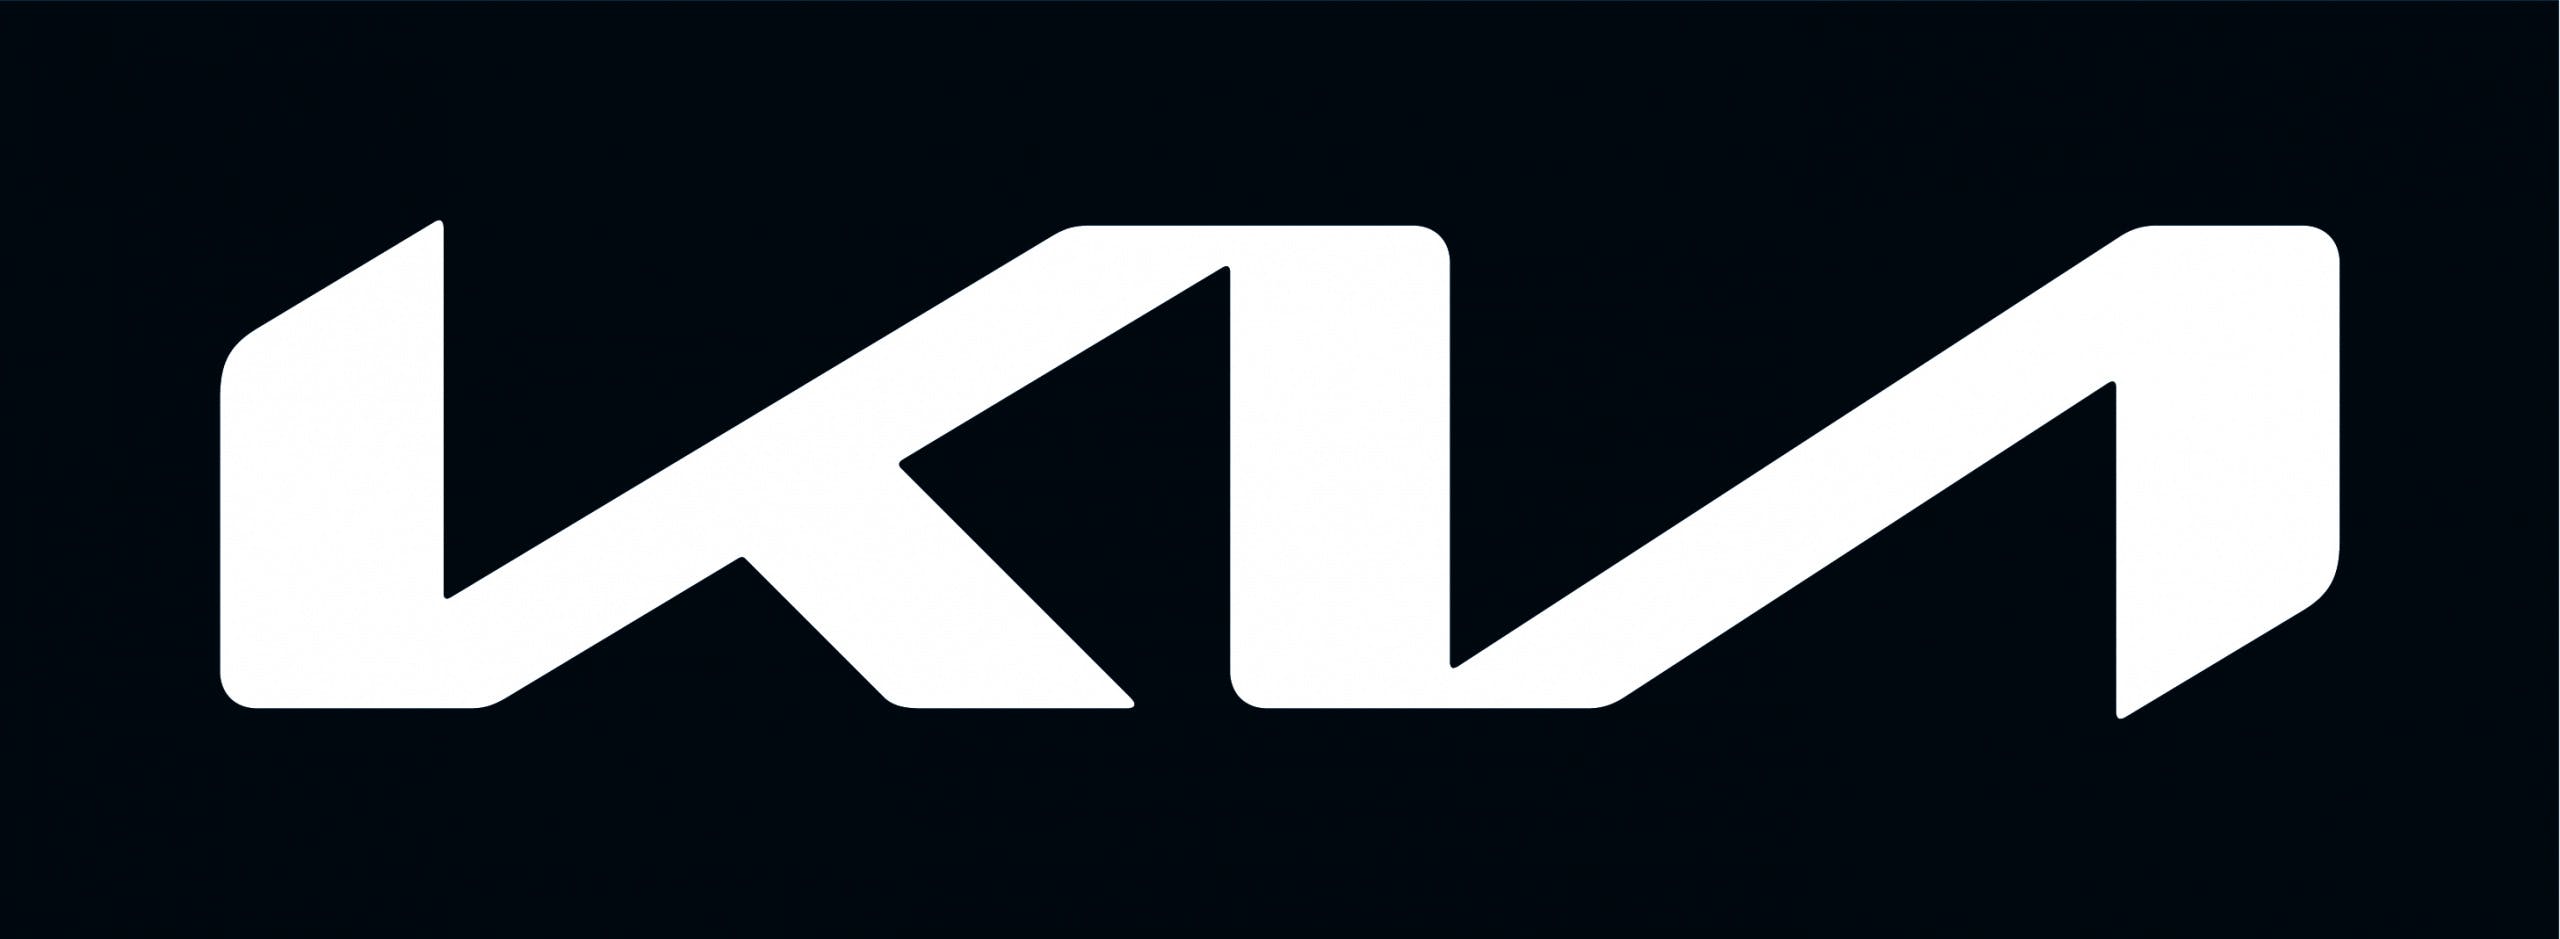 Kia unveils a new signatureinspired logo